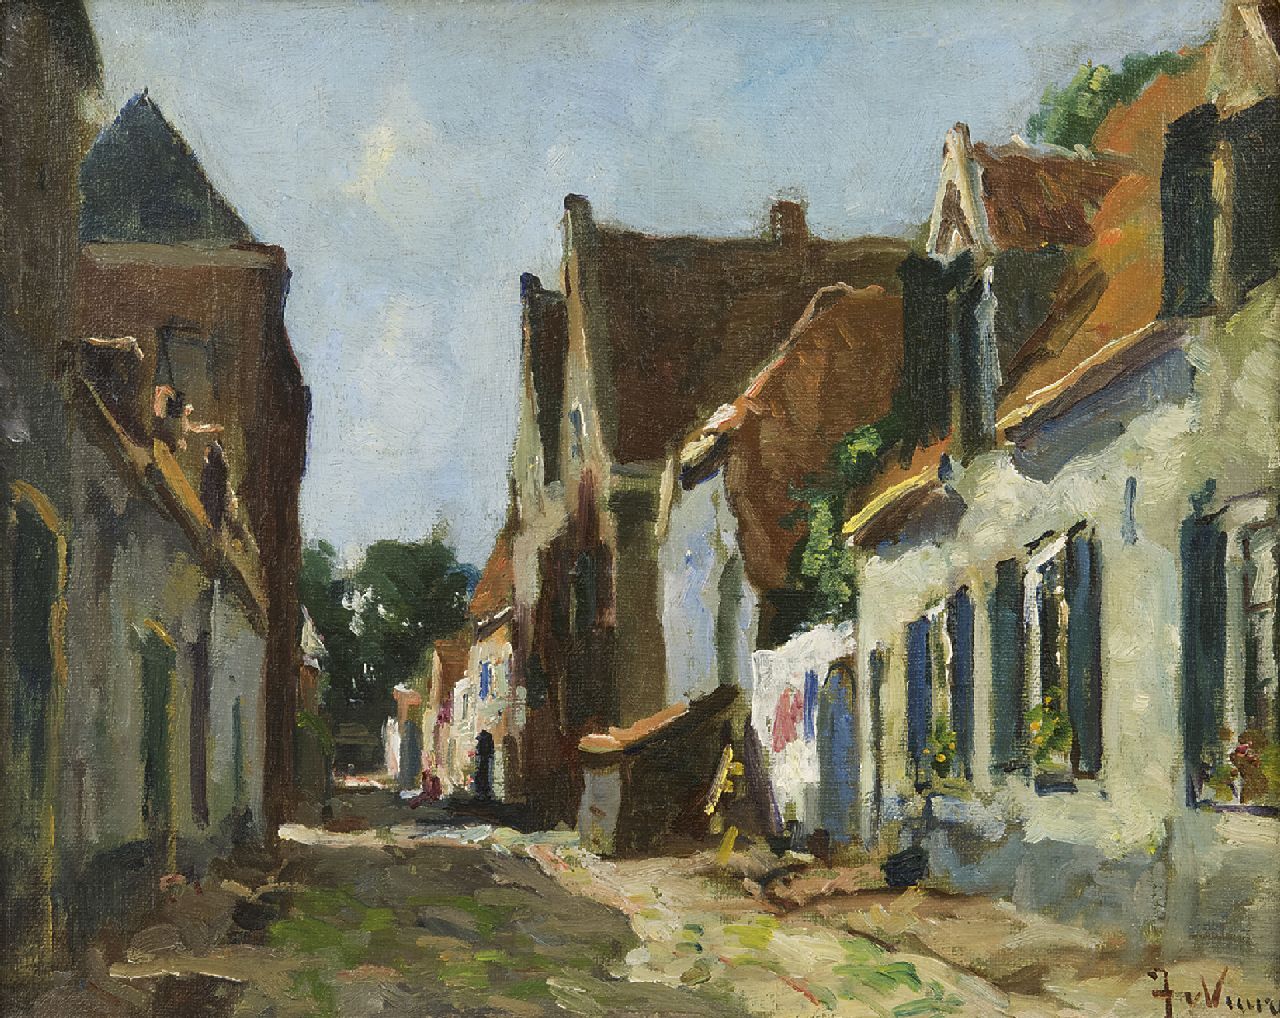 Vuuren J. van | Jan van Vuuren | Paintings offered for sale | A sunny village street, oil on canvas 24.0 x 29.8 cm, signed l.r.